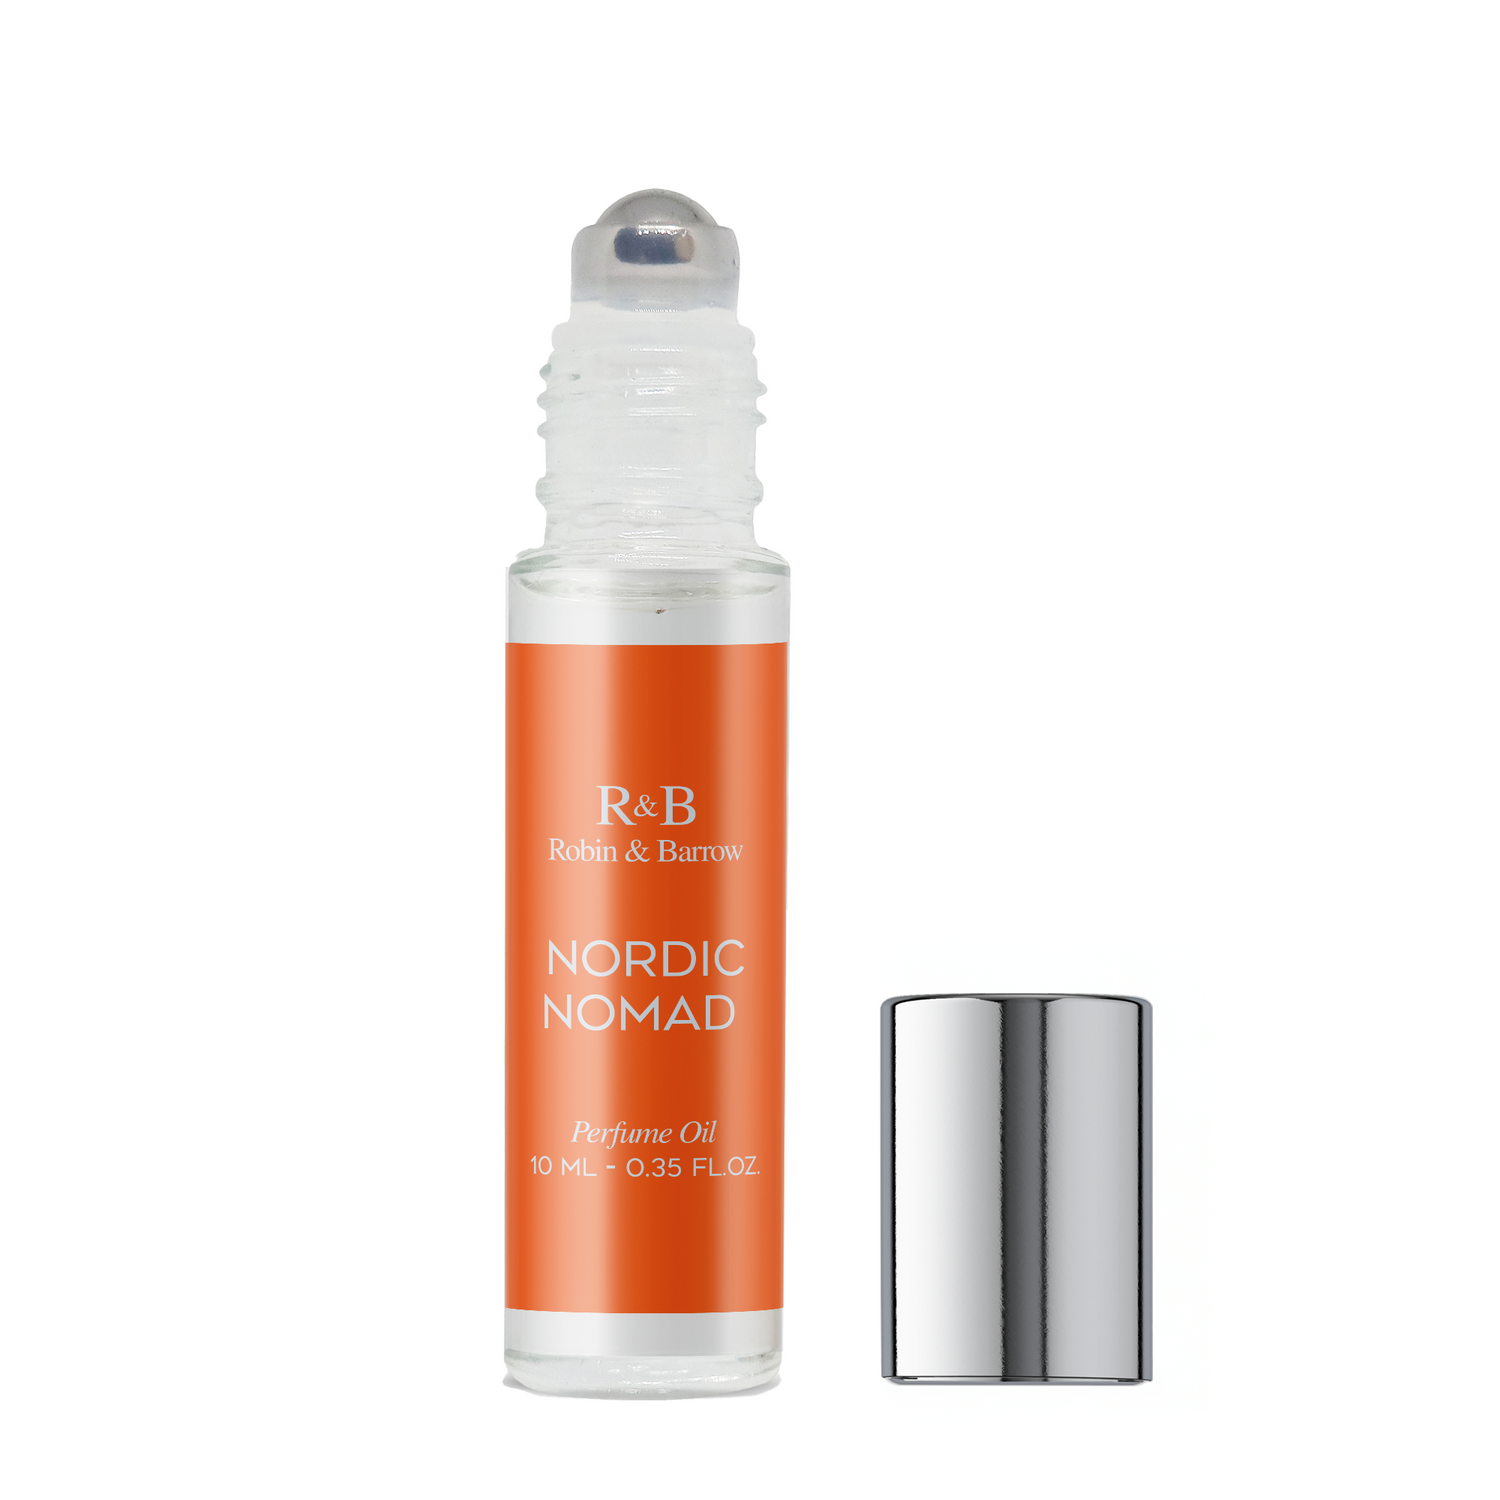 Nordic Nomad - Perfume Oil